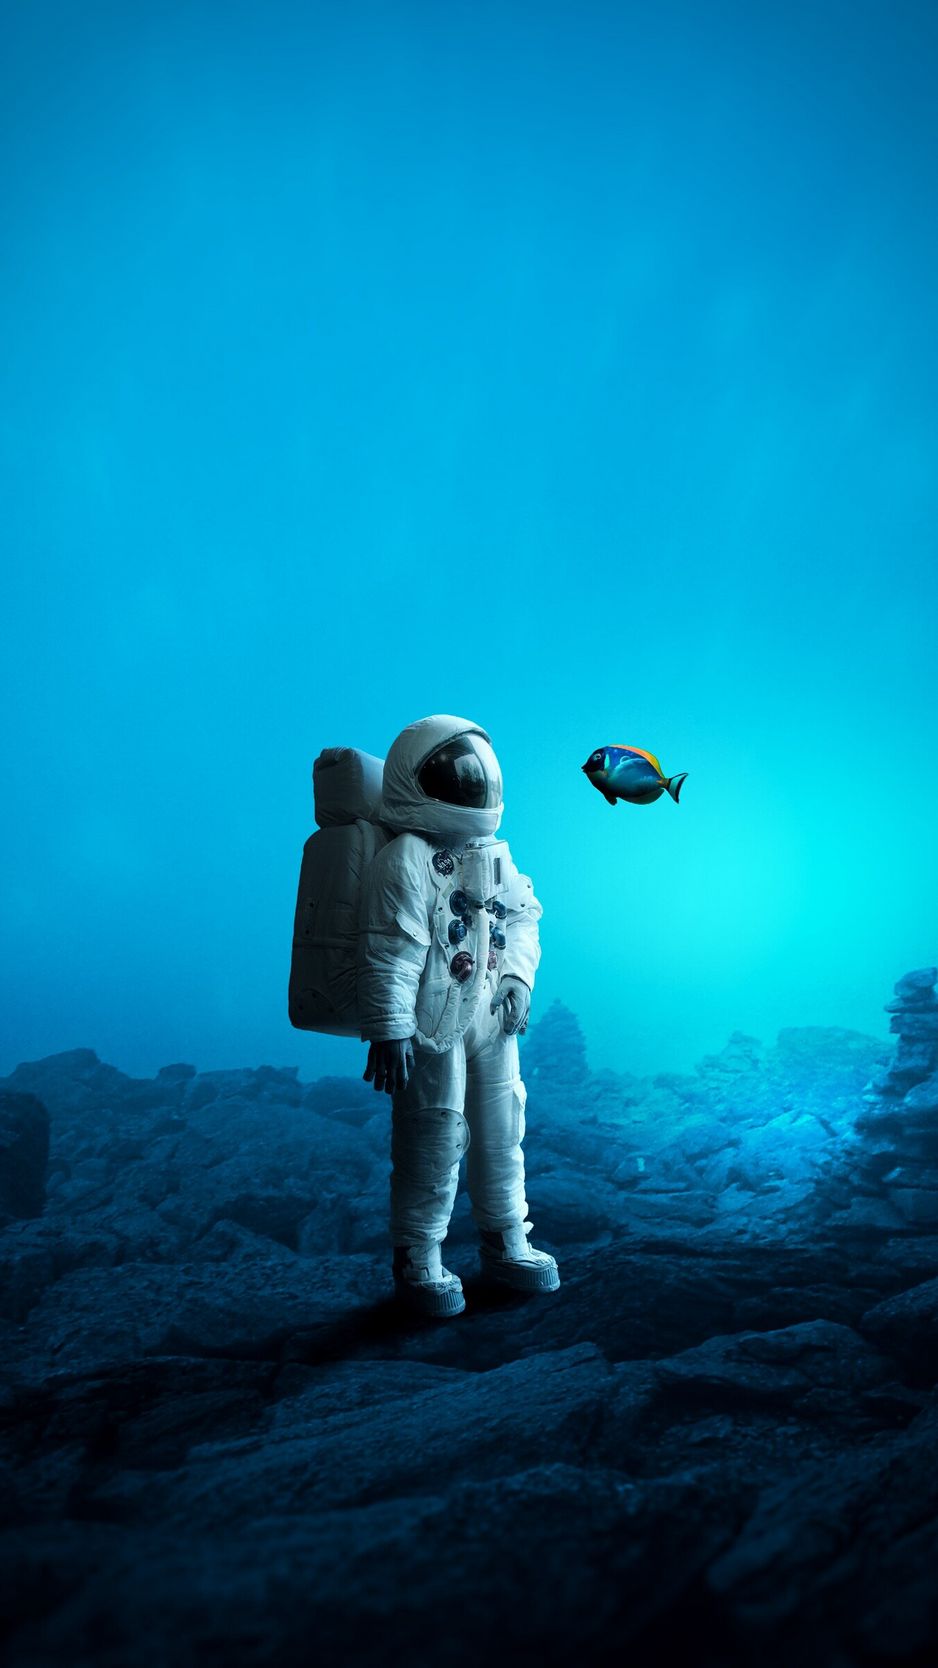 astronaut fish